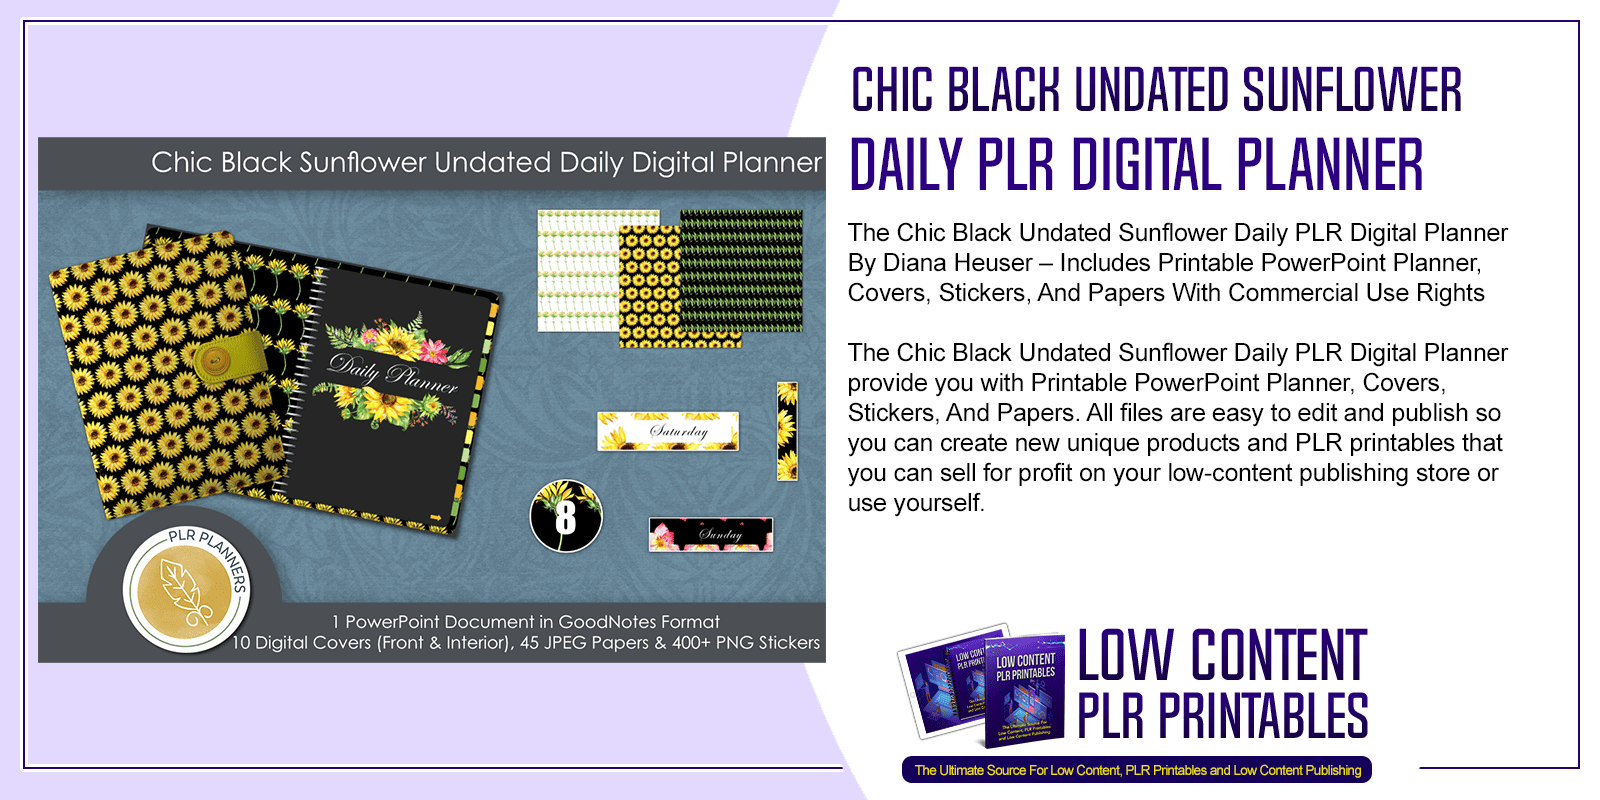 Chic Black Undated Sunflower Daily PLR Digital Planner